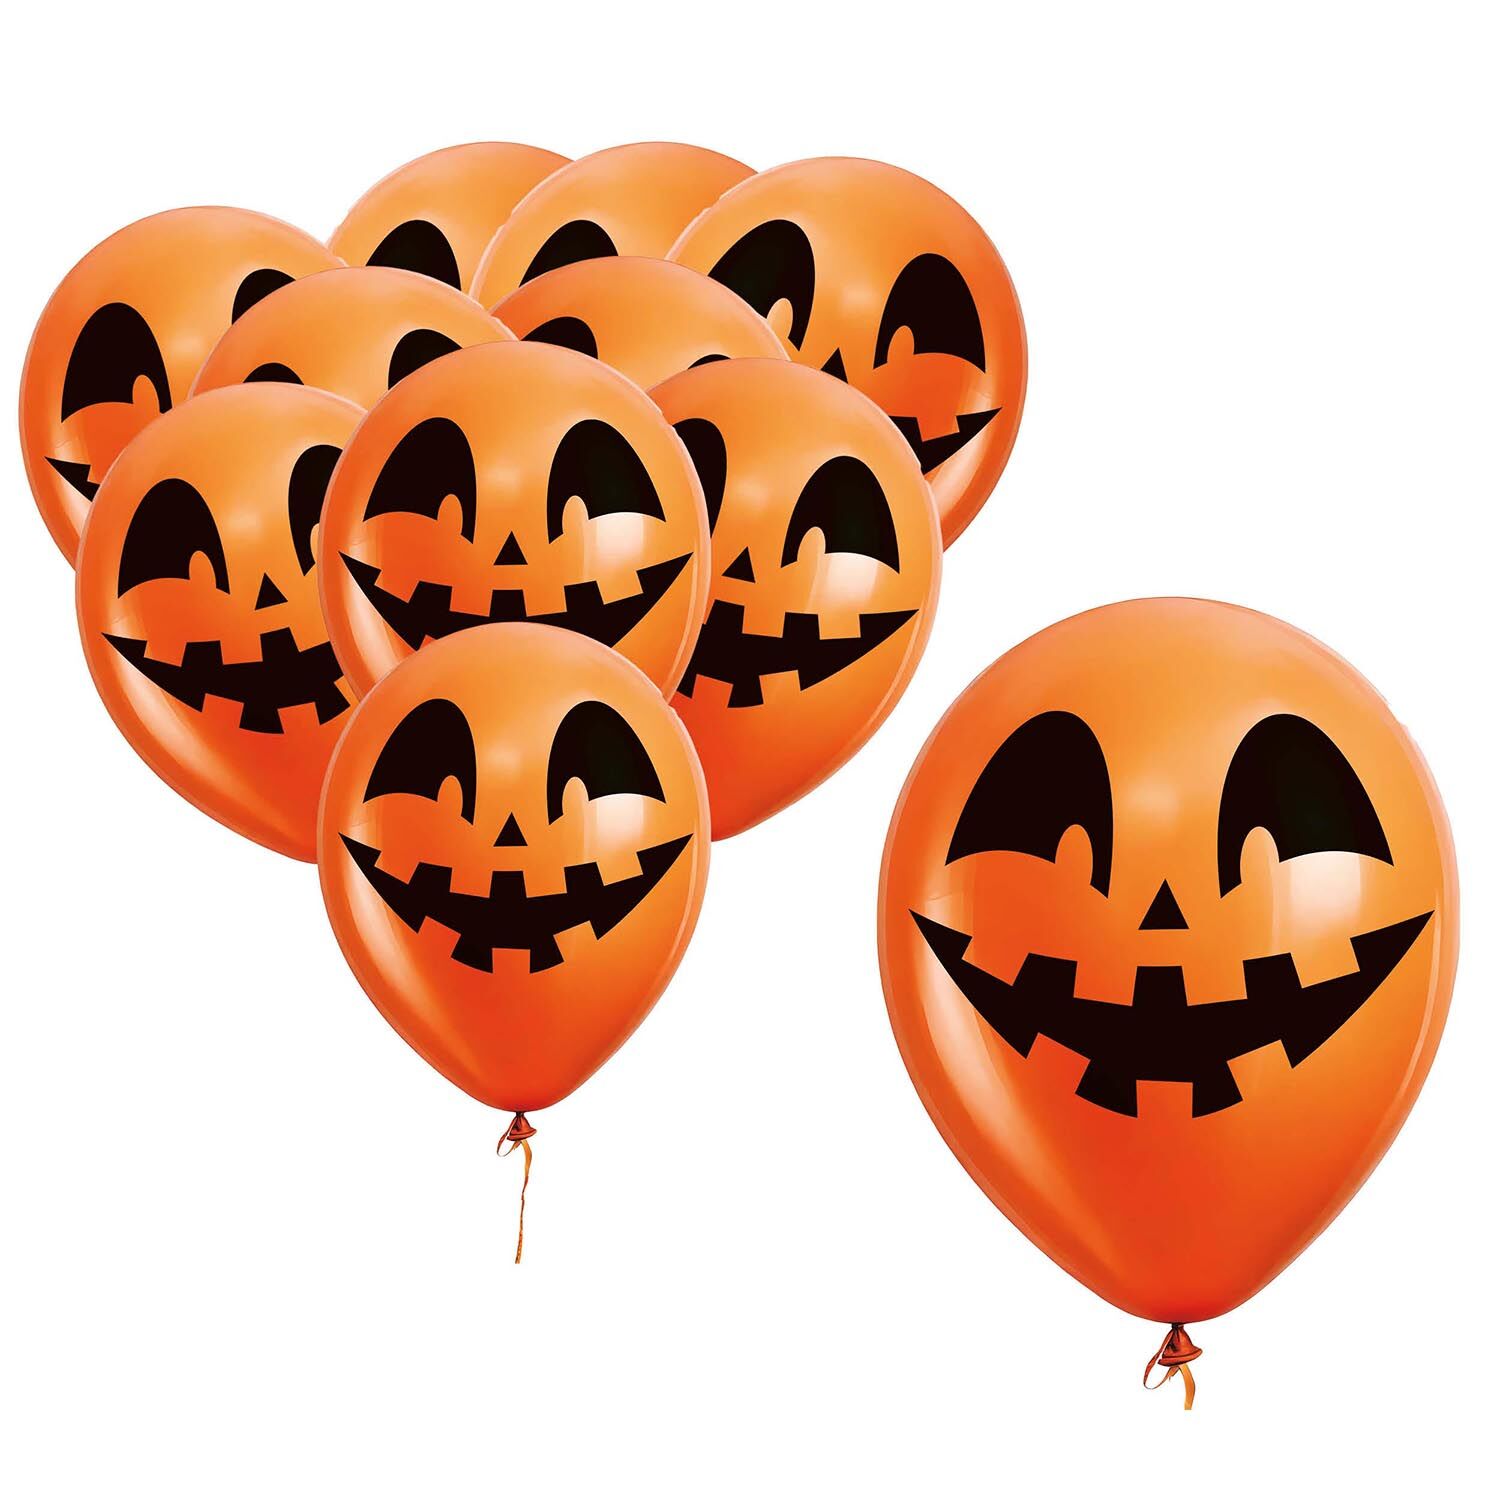 NEU Latex-Luftballons Halloween Krbis, orange, ca. 30cm, 10 Stck